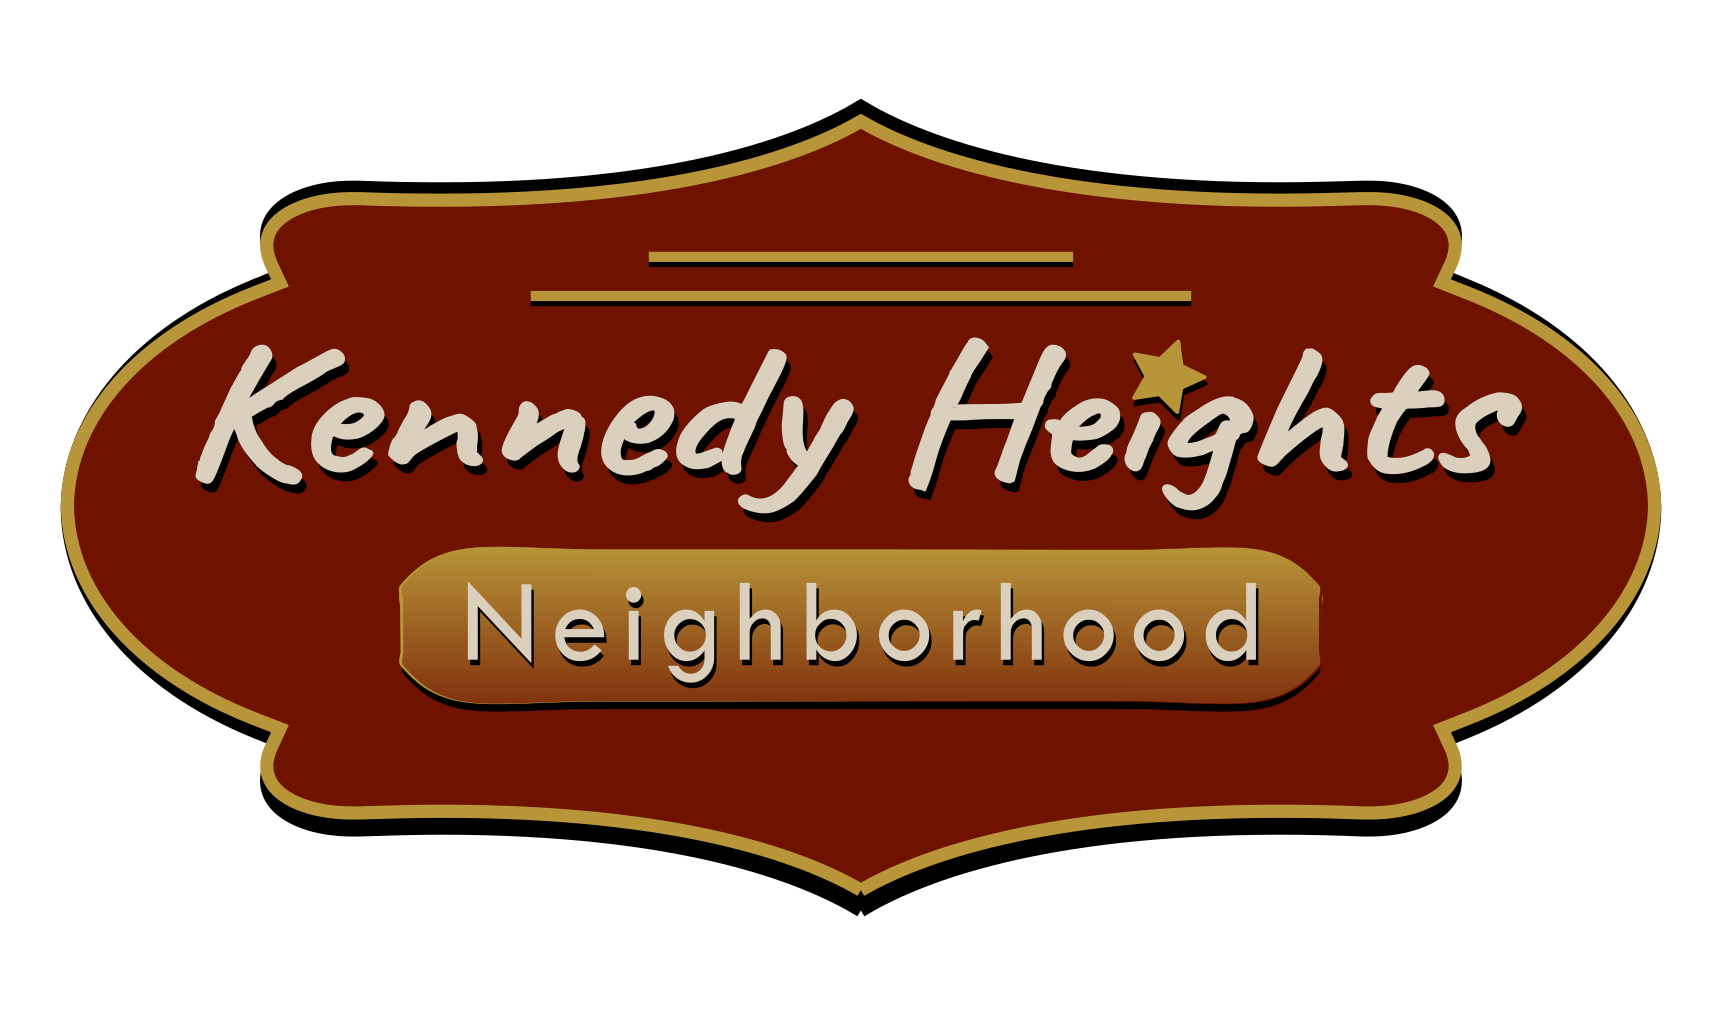 Madison’s Kennedy Heights Neighborhood Come Together